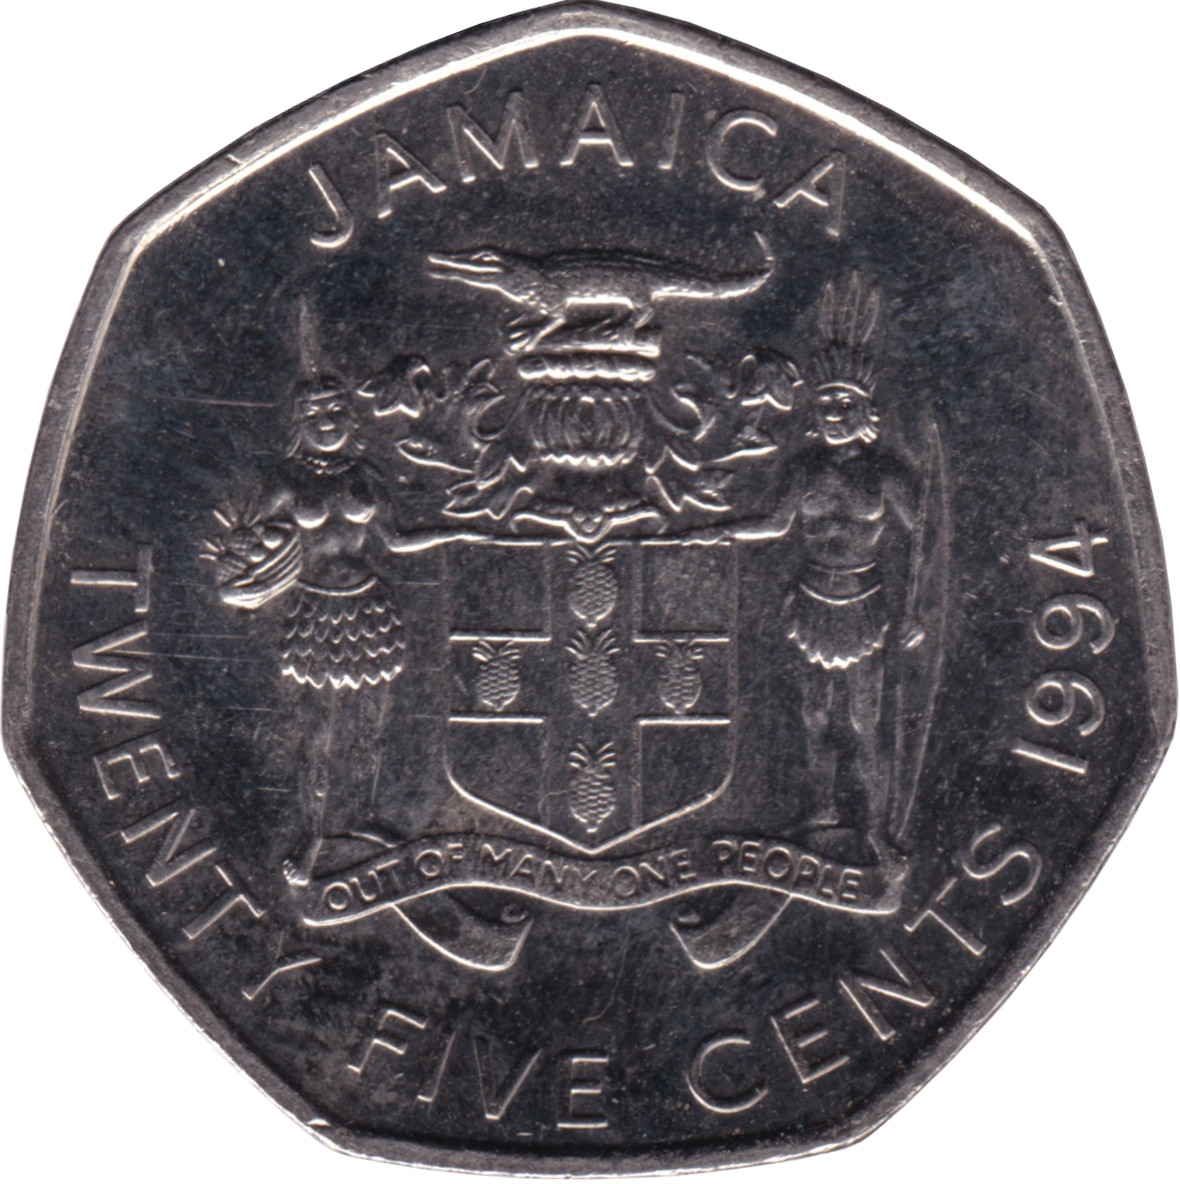 25 cents - Marcus Garvey - Largeste